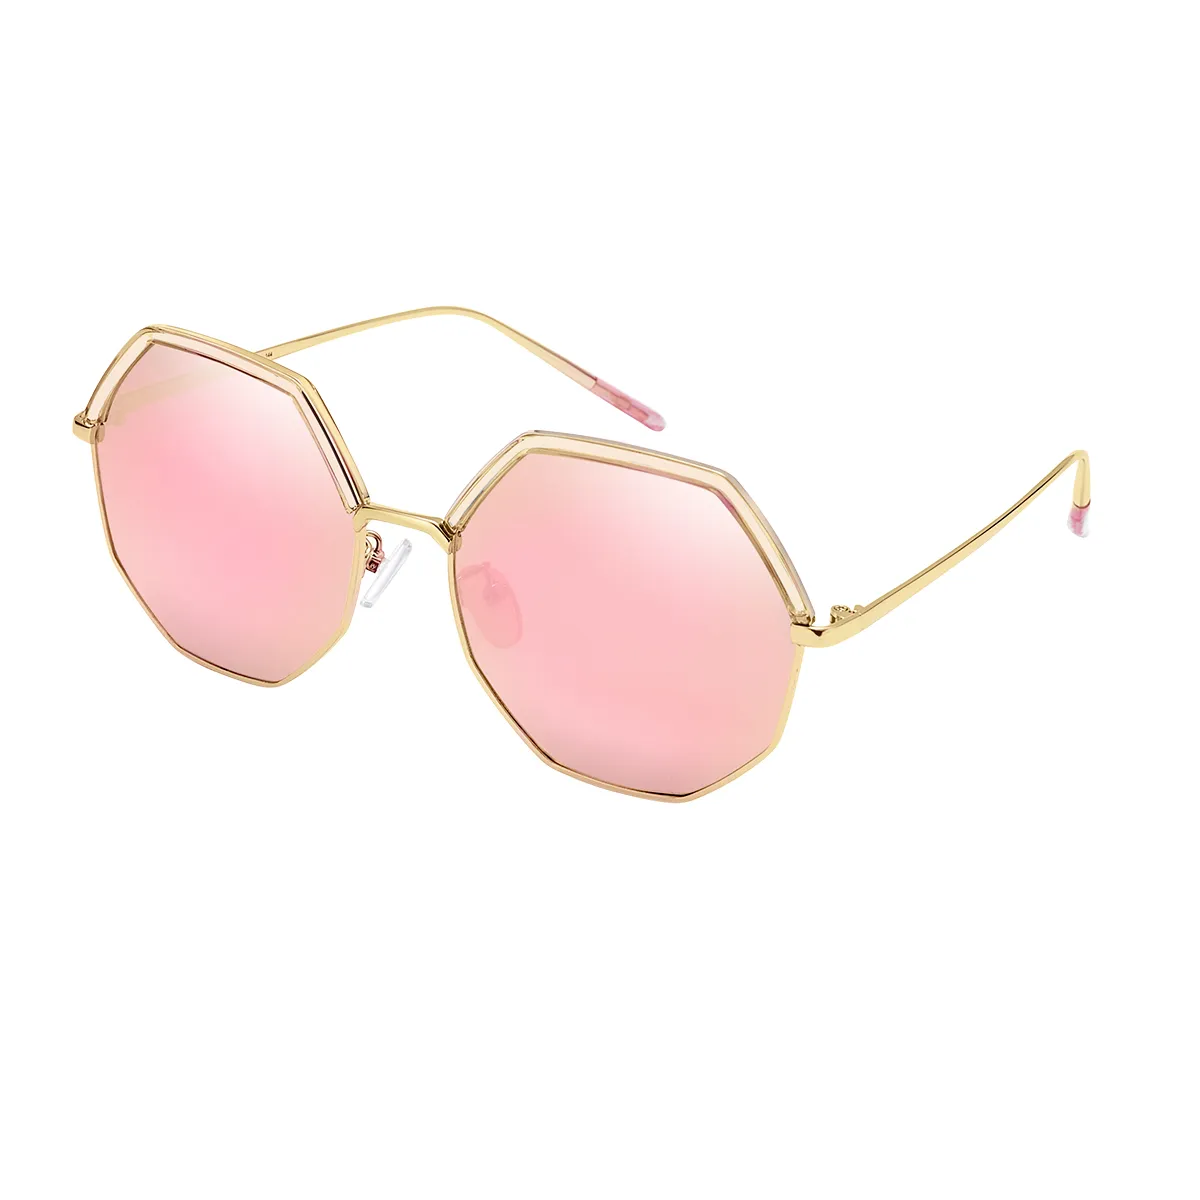 Di - Geometric Gold/Pink Sunglasses for Women